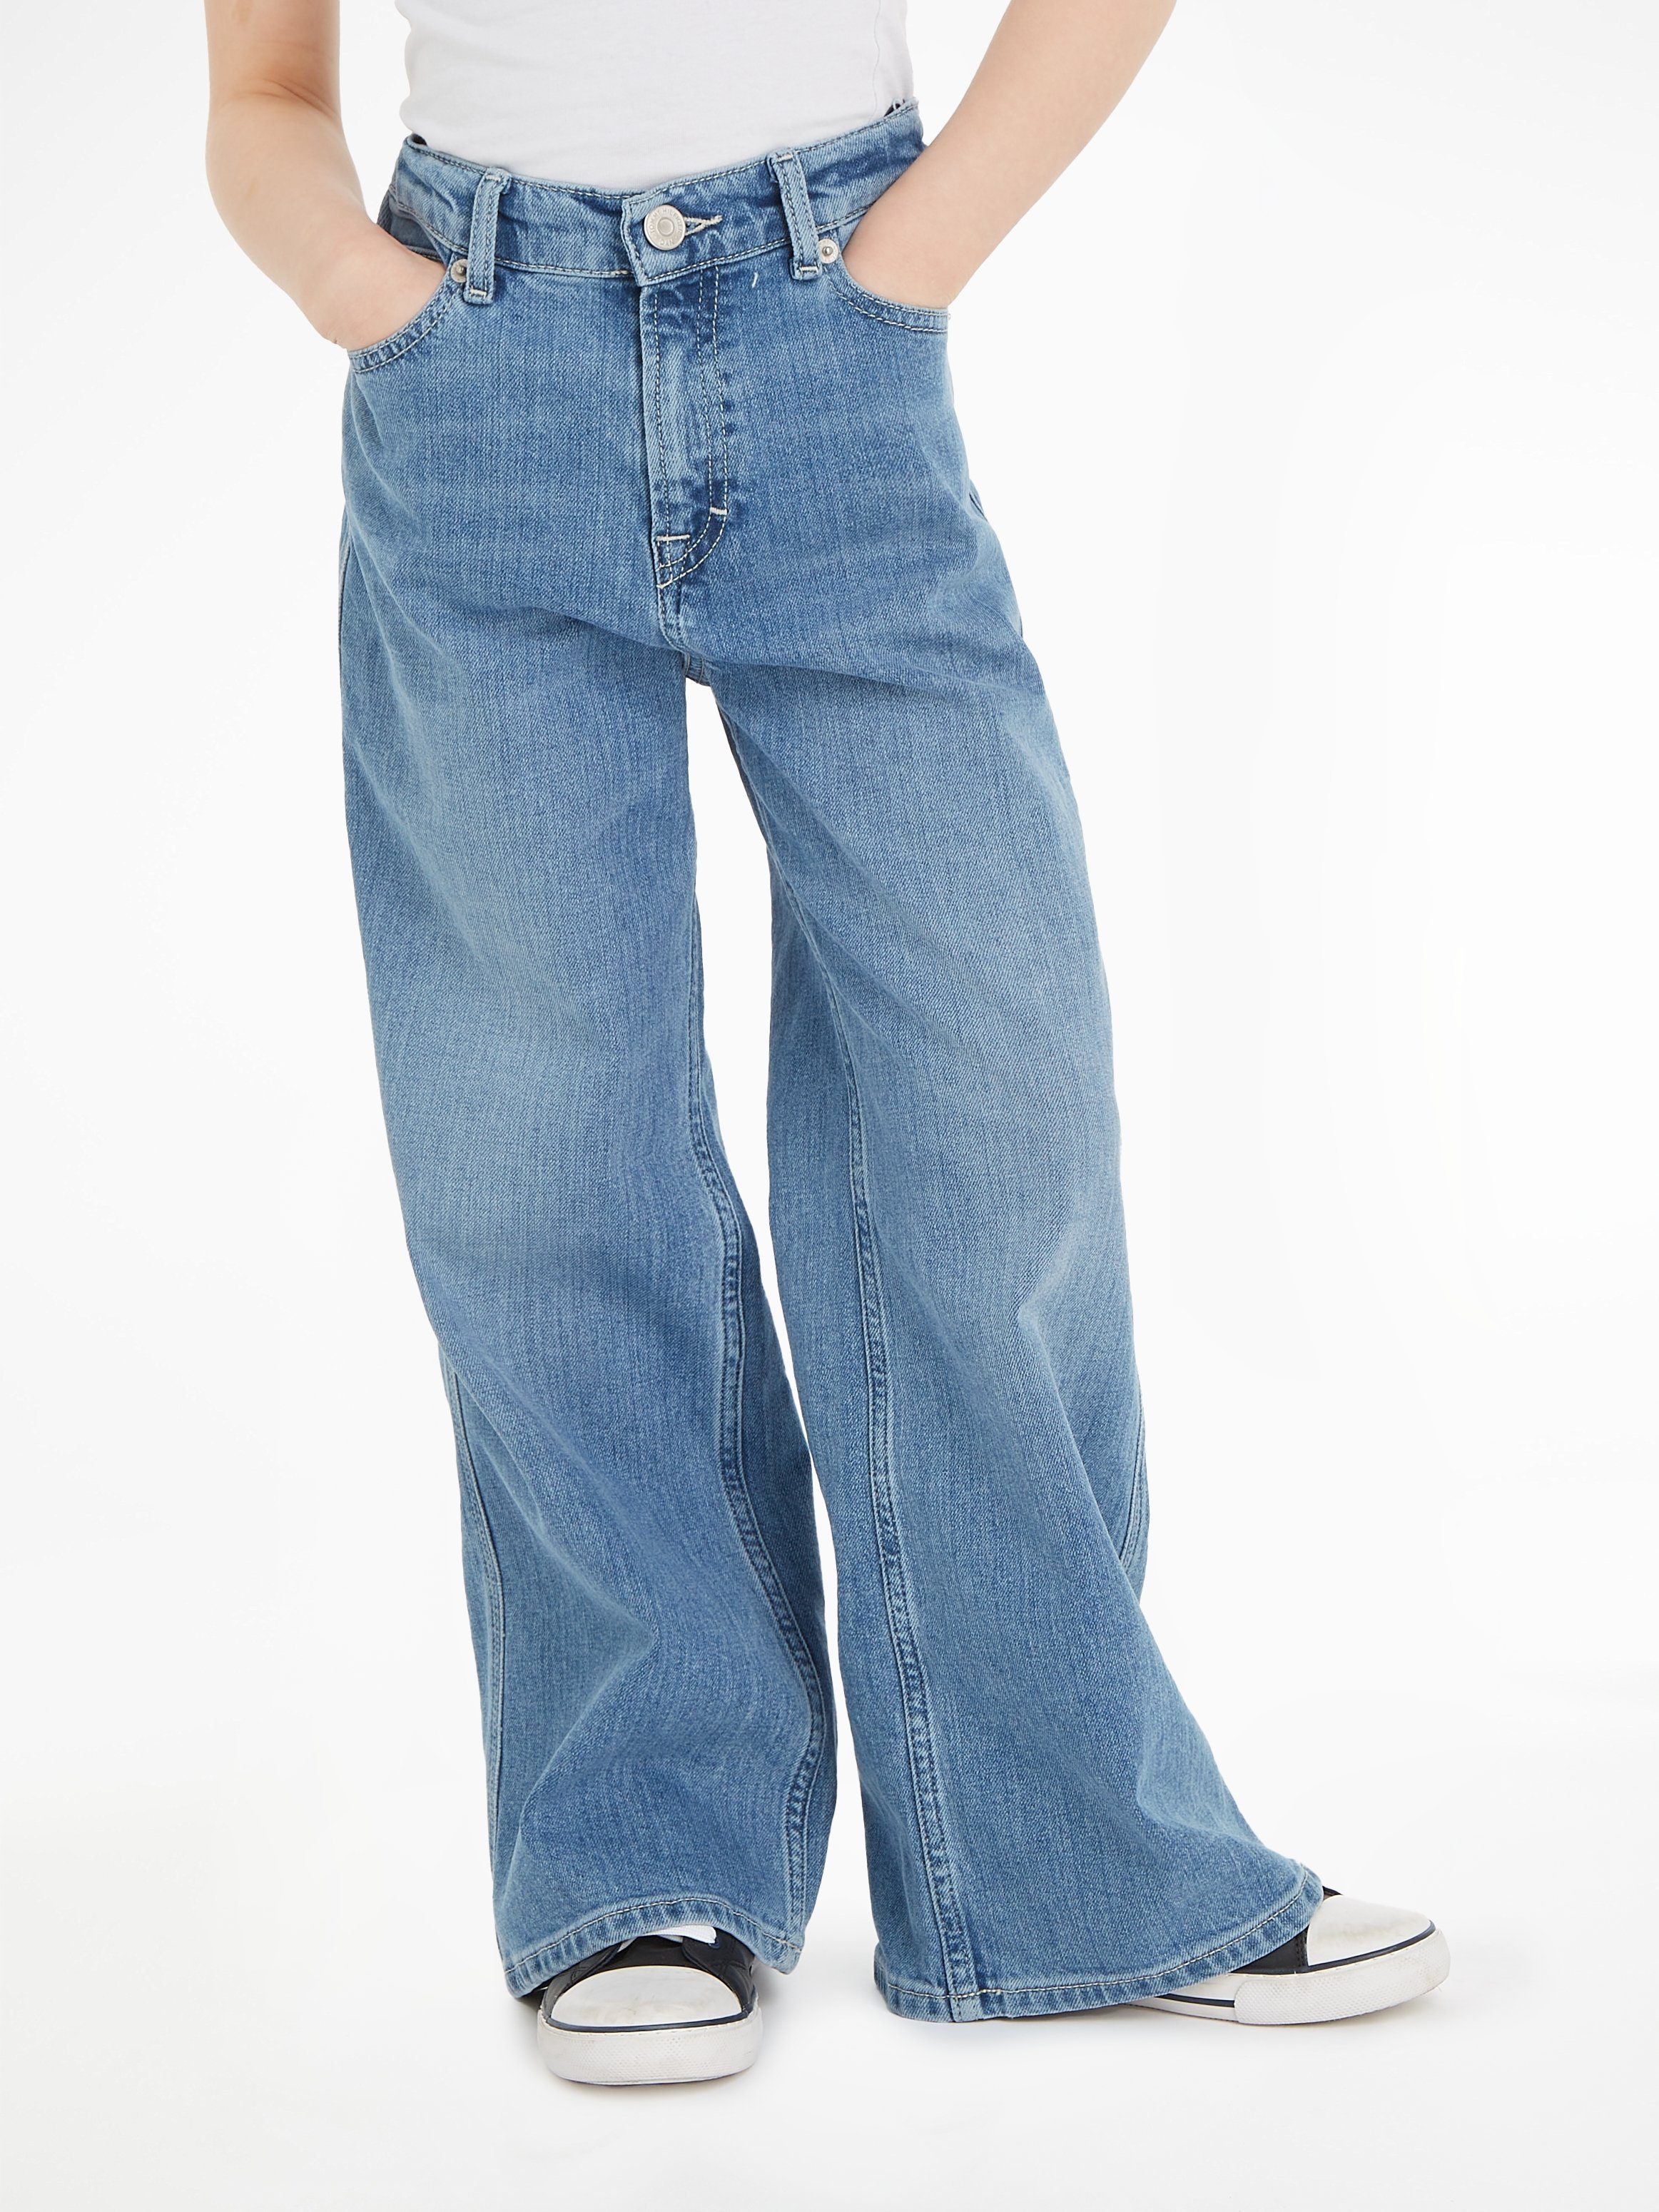 Weite Tommy Jeans im MABEL Hilfiger WASH 5-Pocket-Style MID